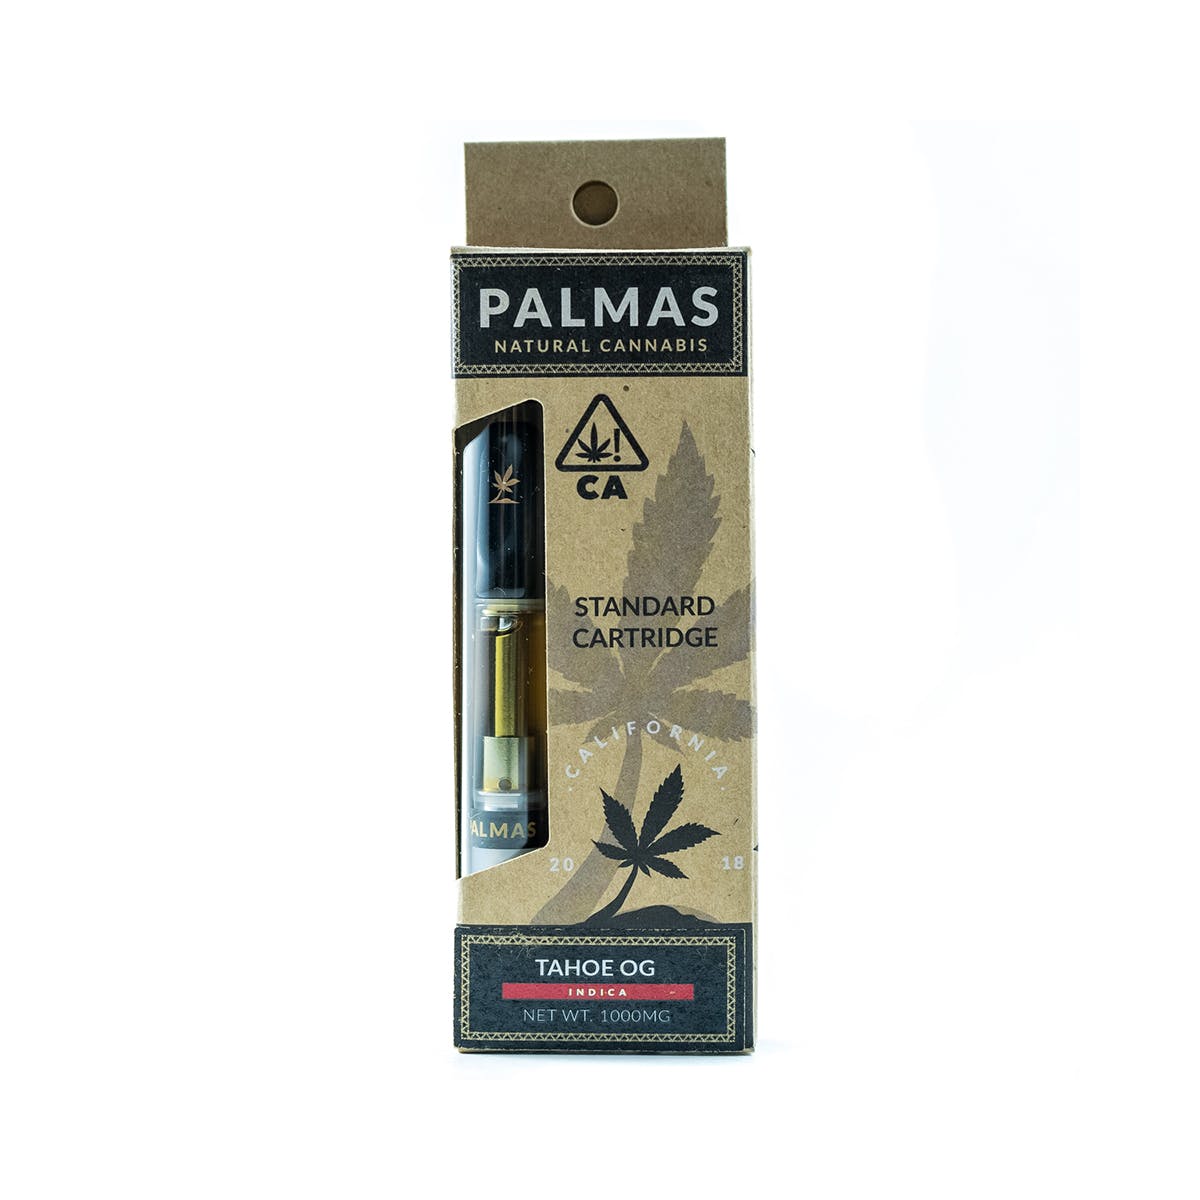 Palmas Standard Cartridge - Tahoe OG